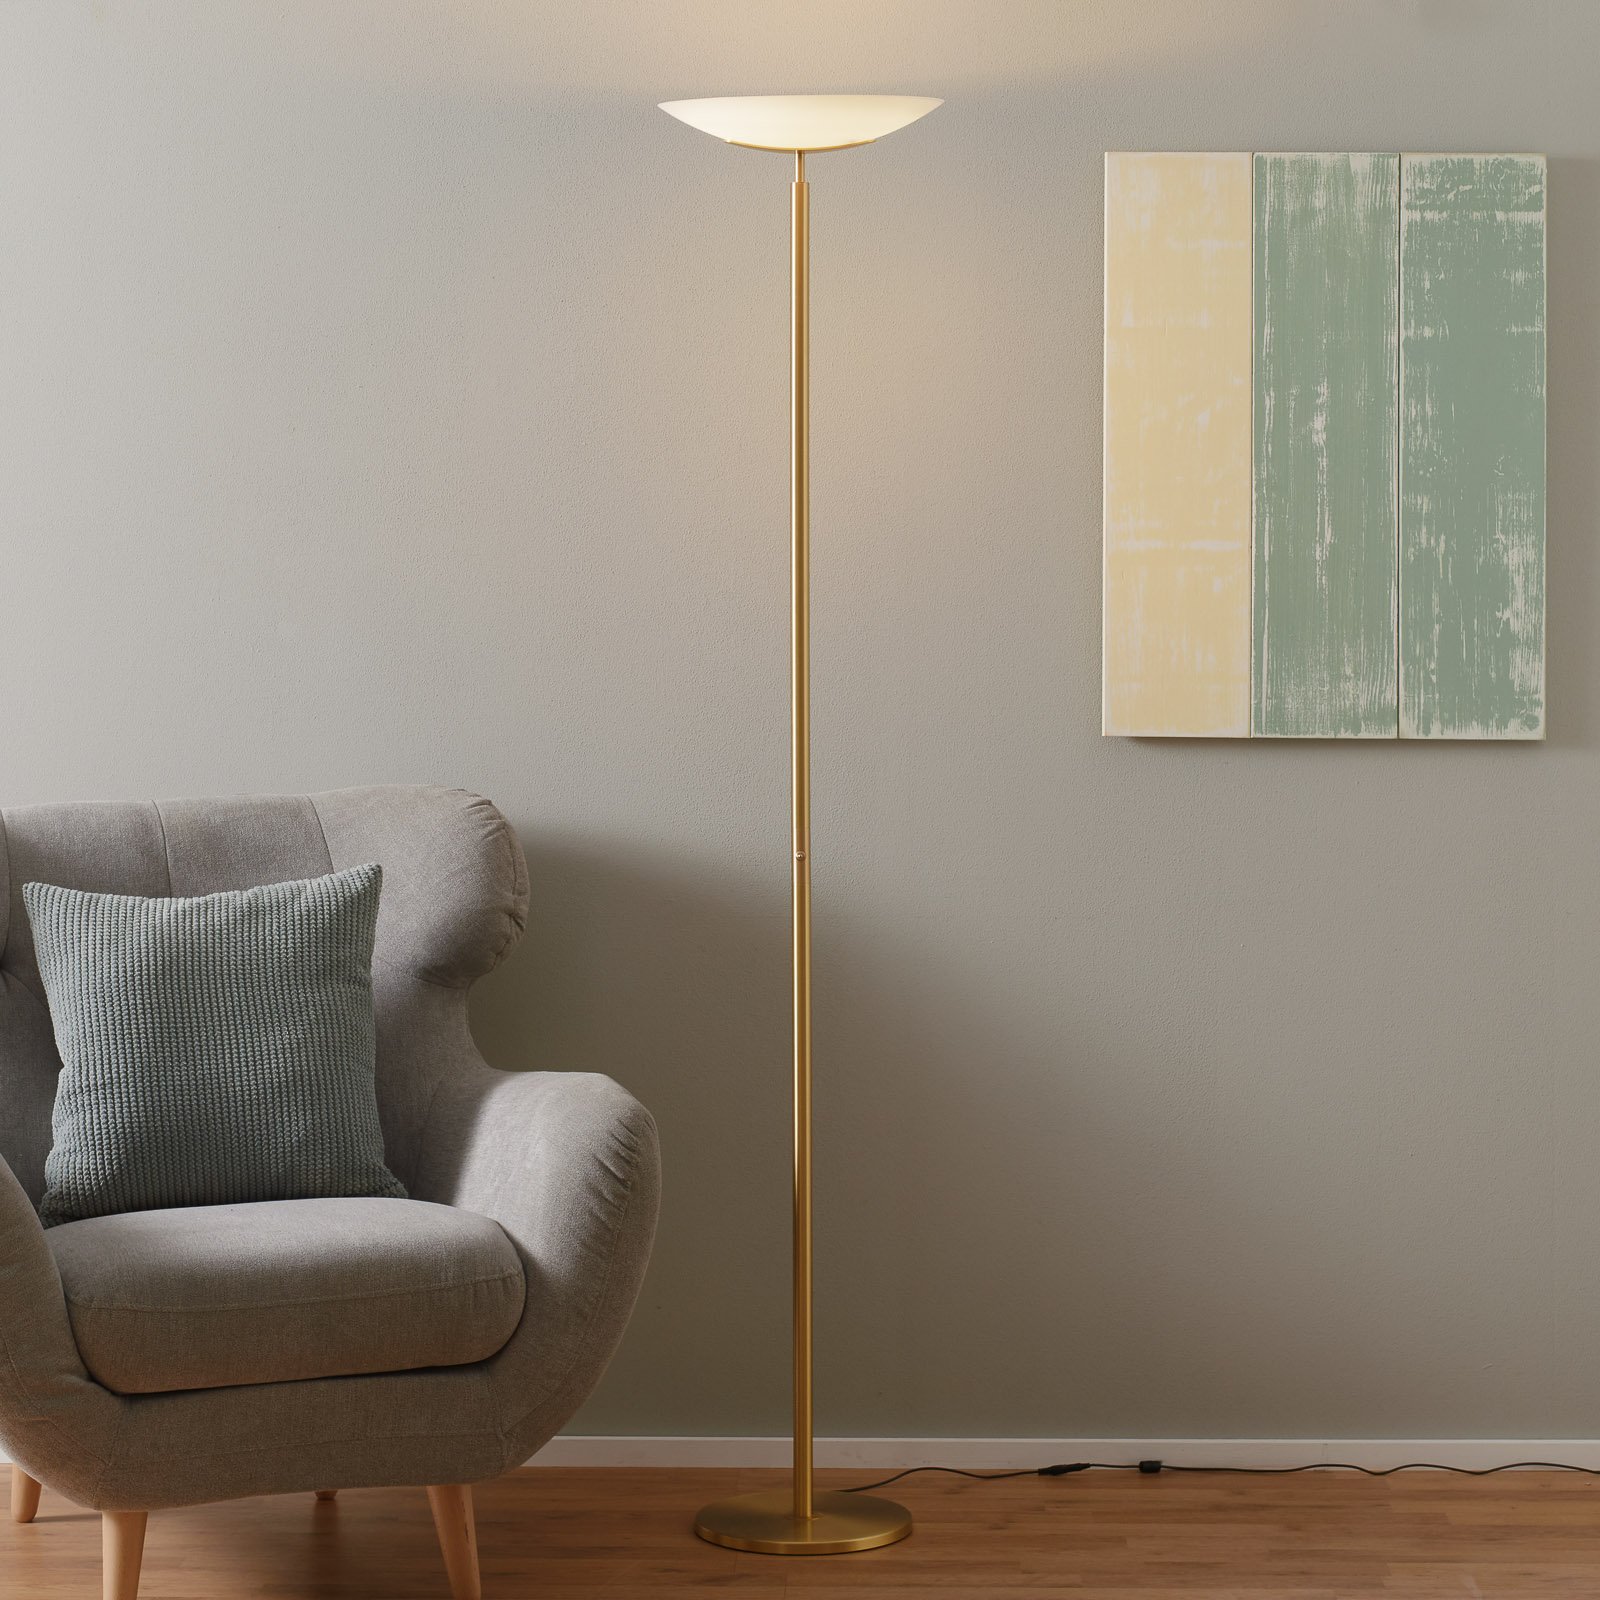 High-quality LED uplighter floor lamp Mika, brass-coloured